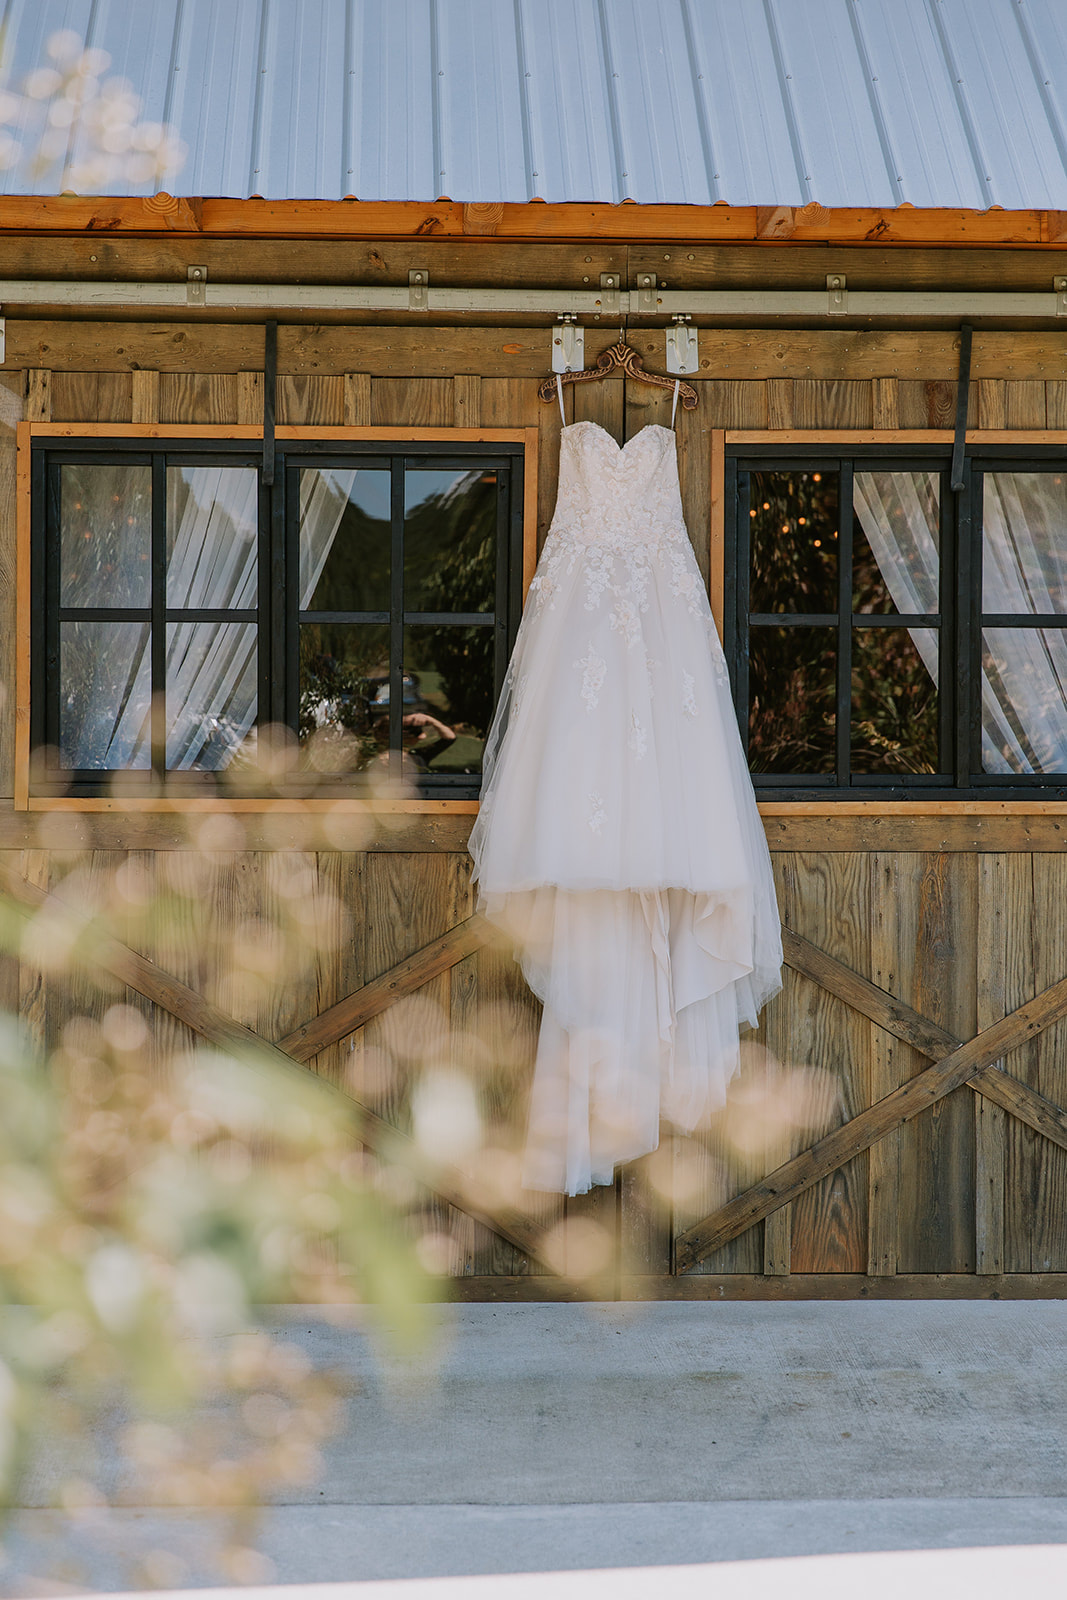 Wedding dress in front of modern barn doors at north georgia wedding venue